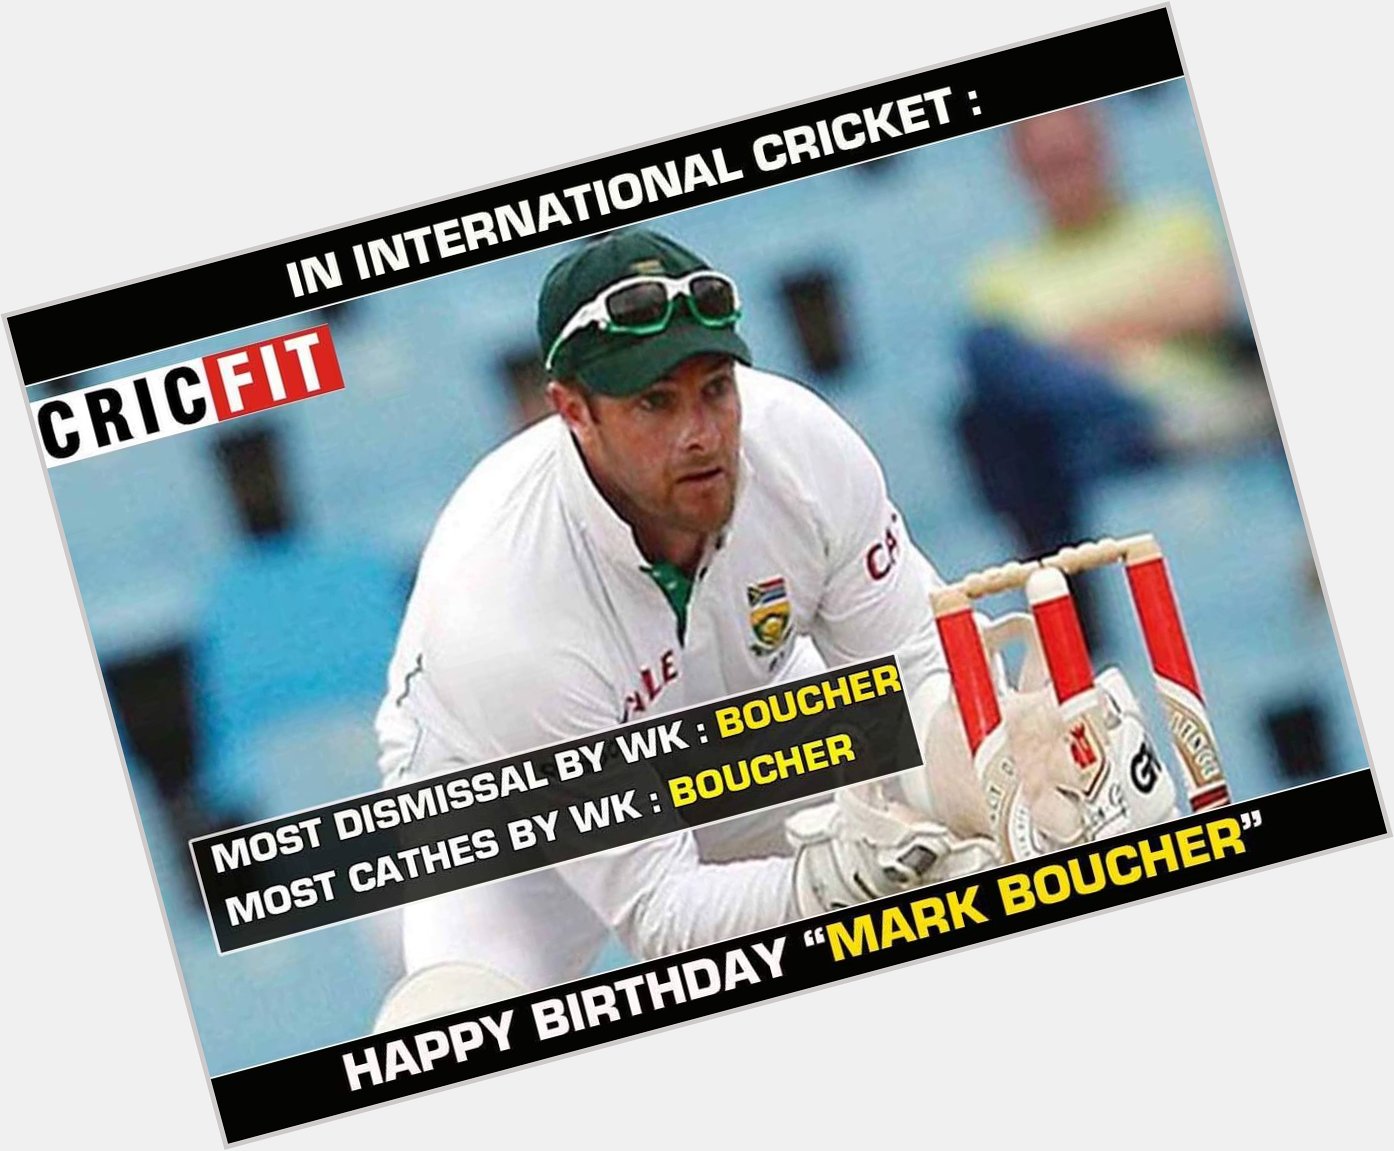 Happy Birthday Mark Boucher!! 